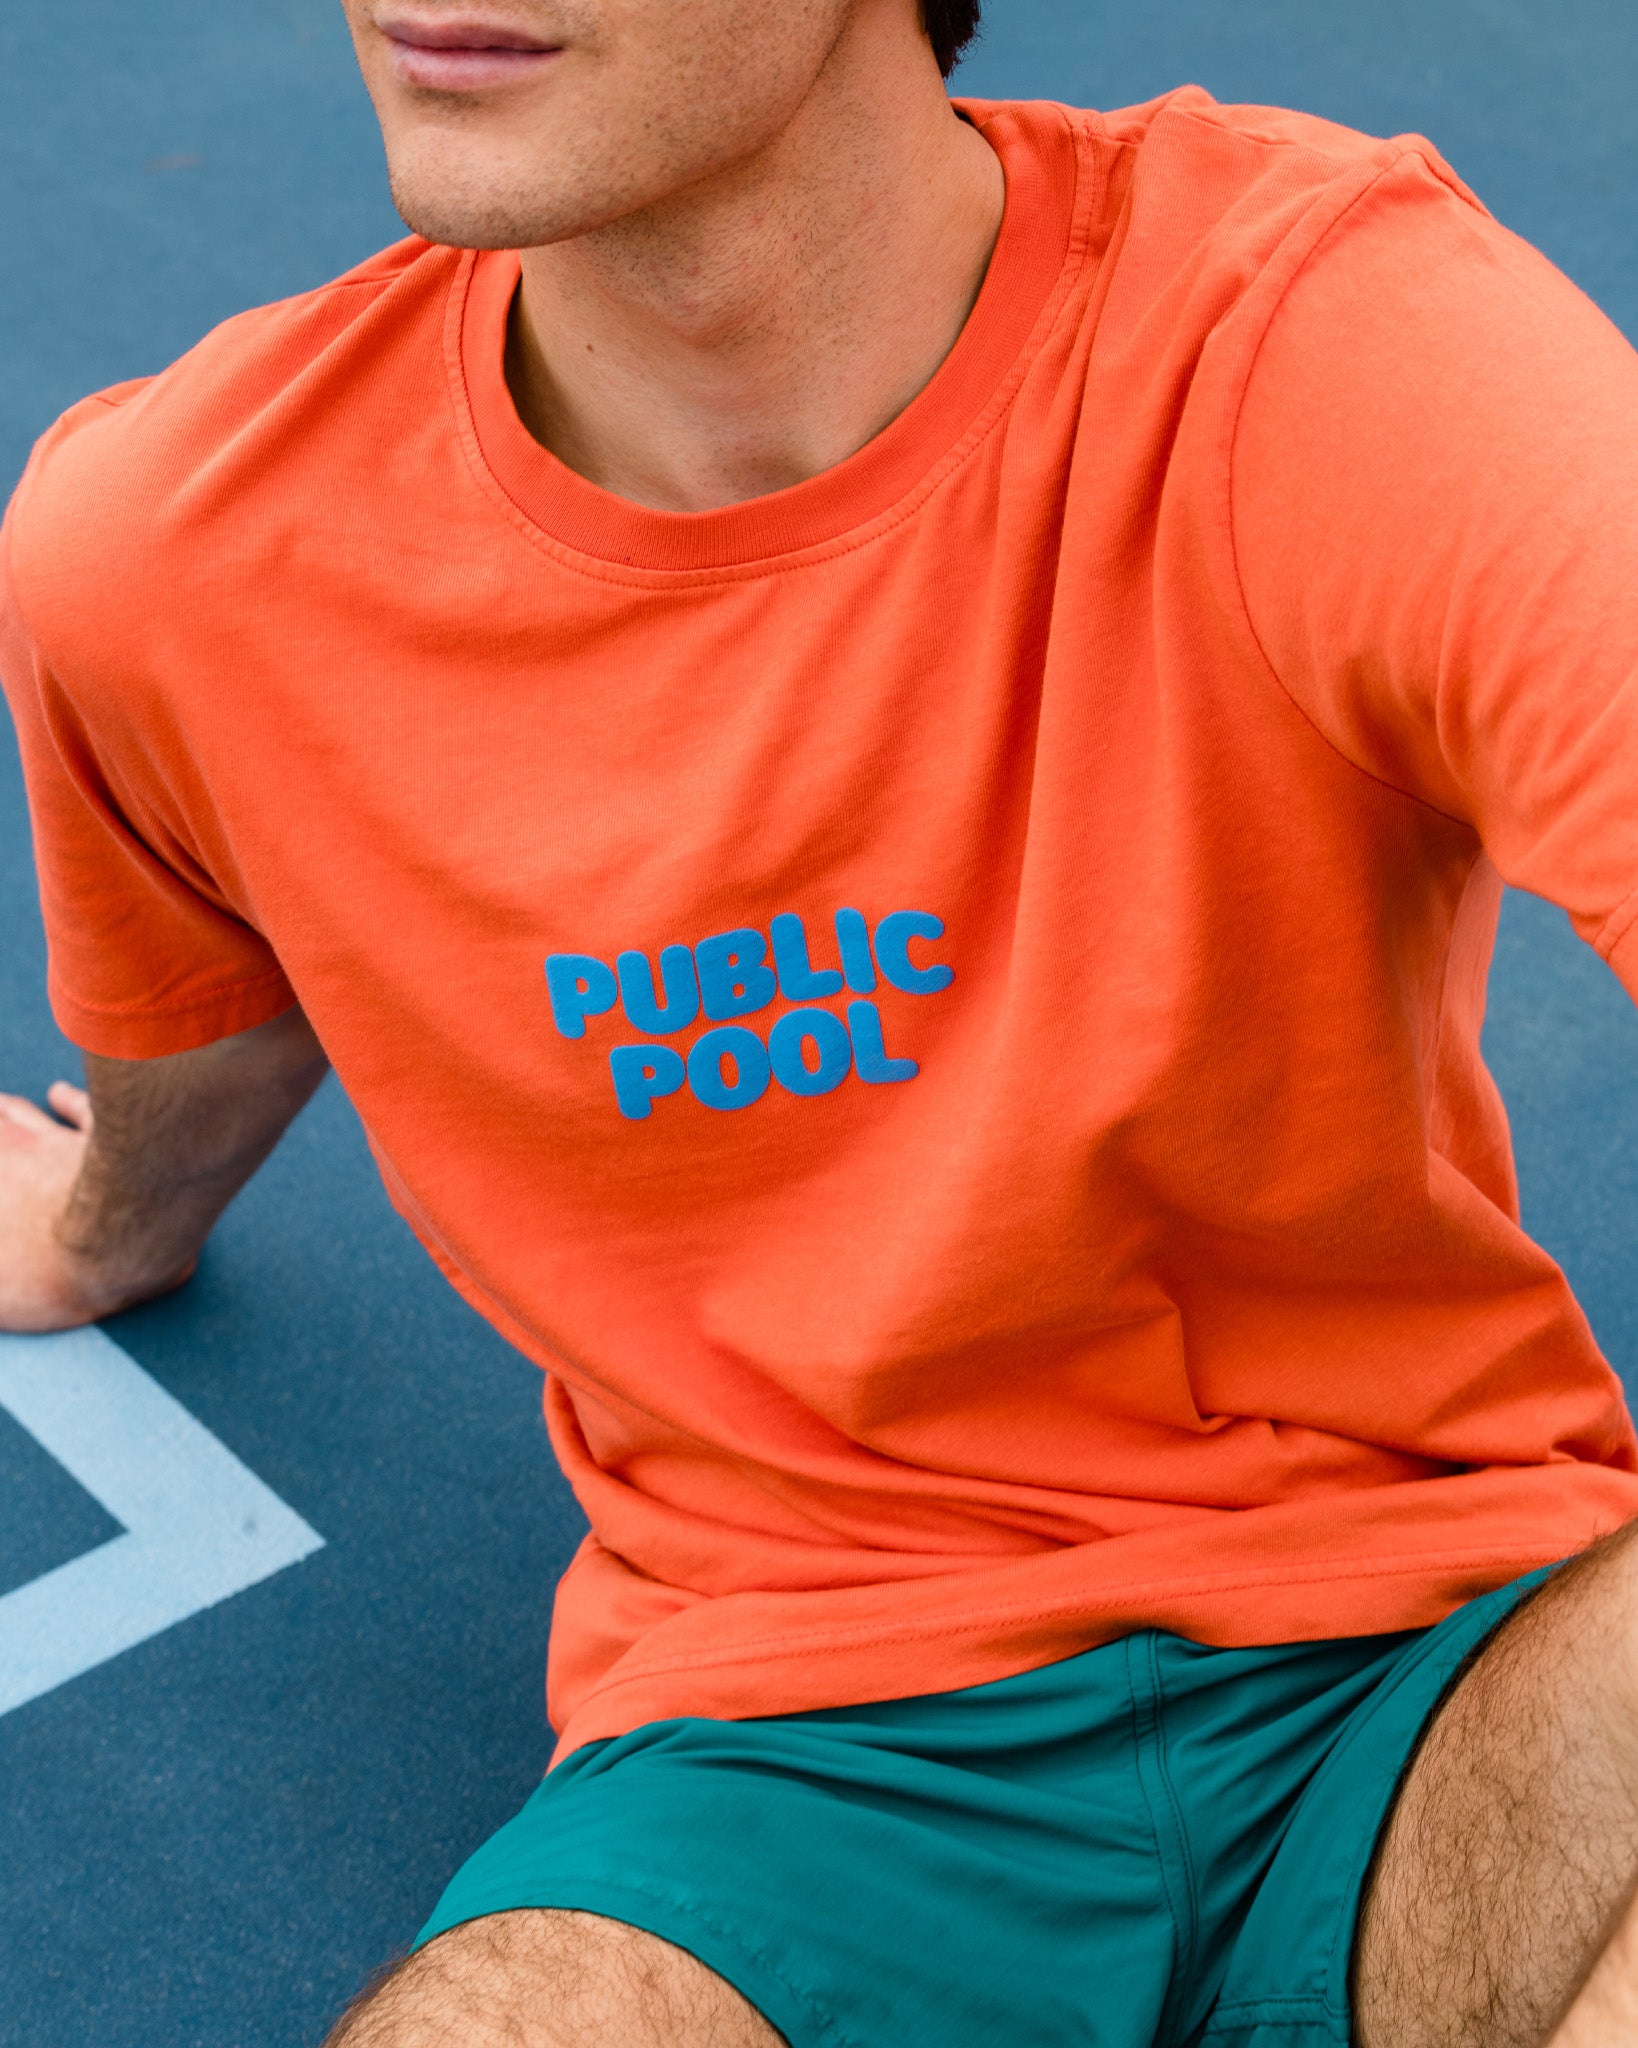 A man wearing an orange tee shirt. 